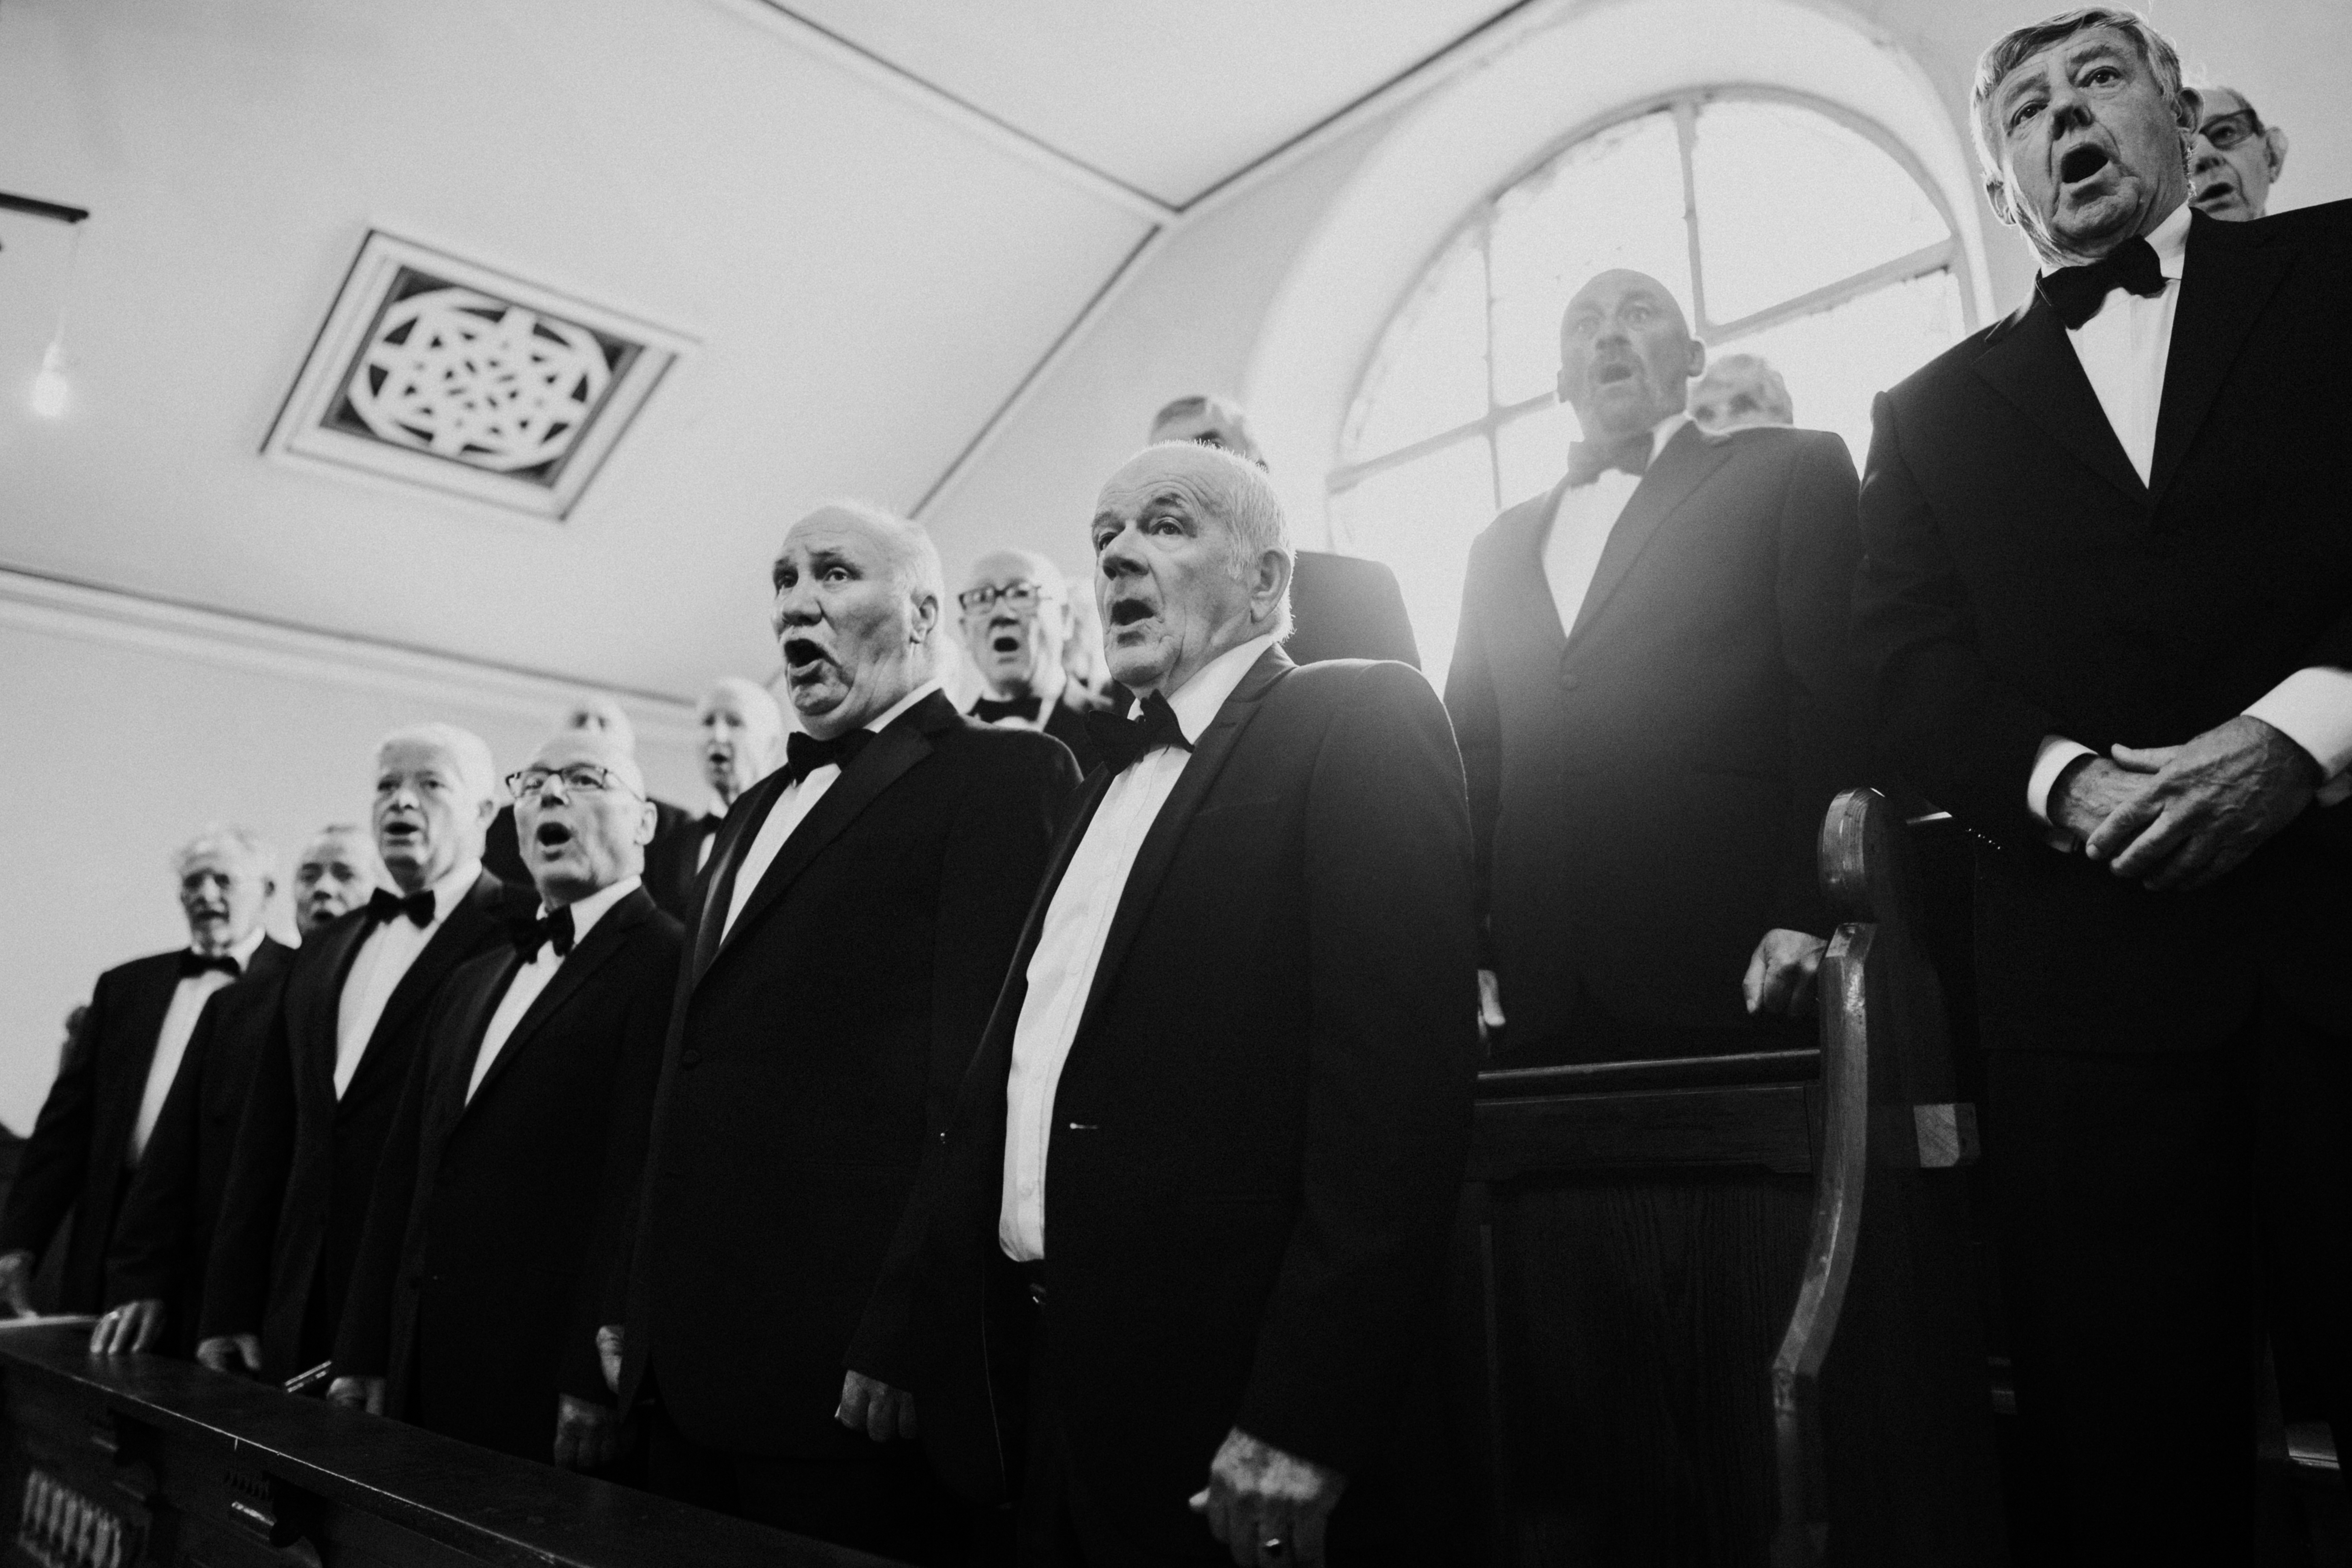 llantrisant male choir 